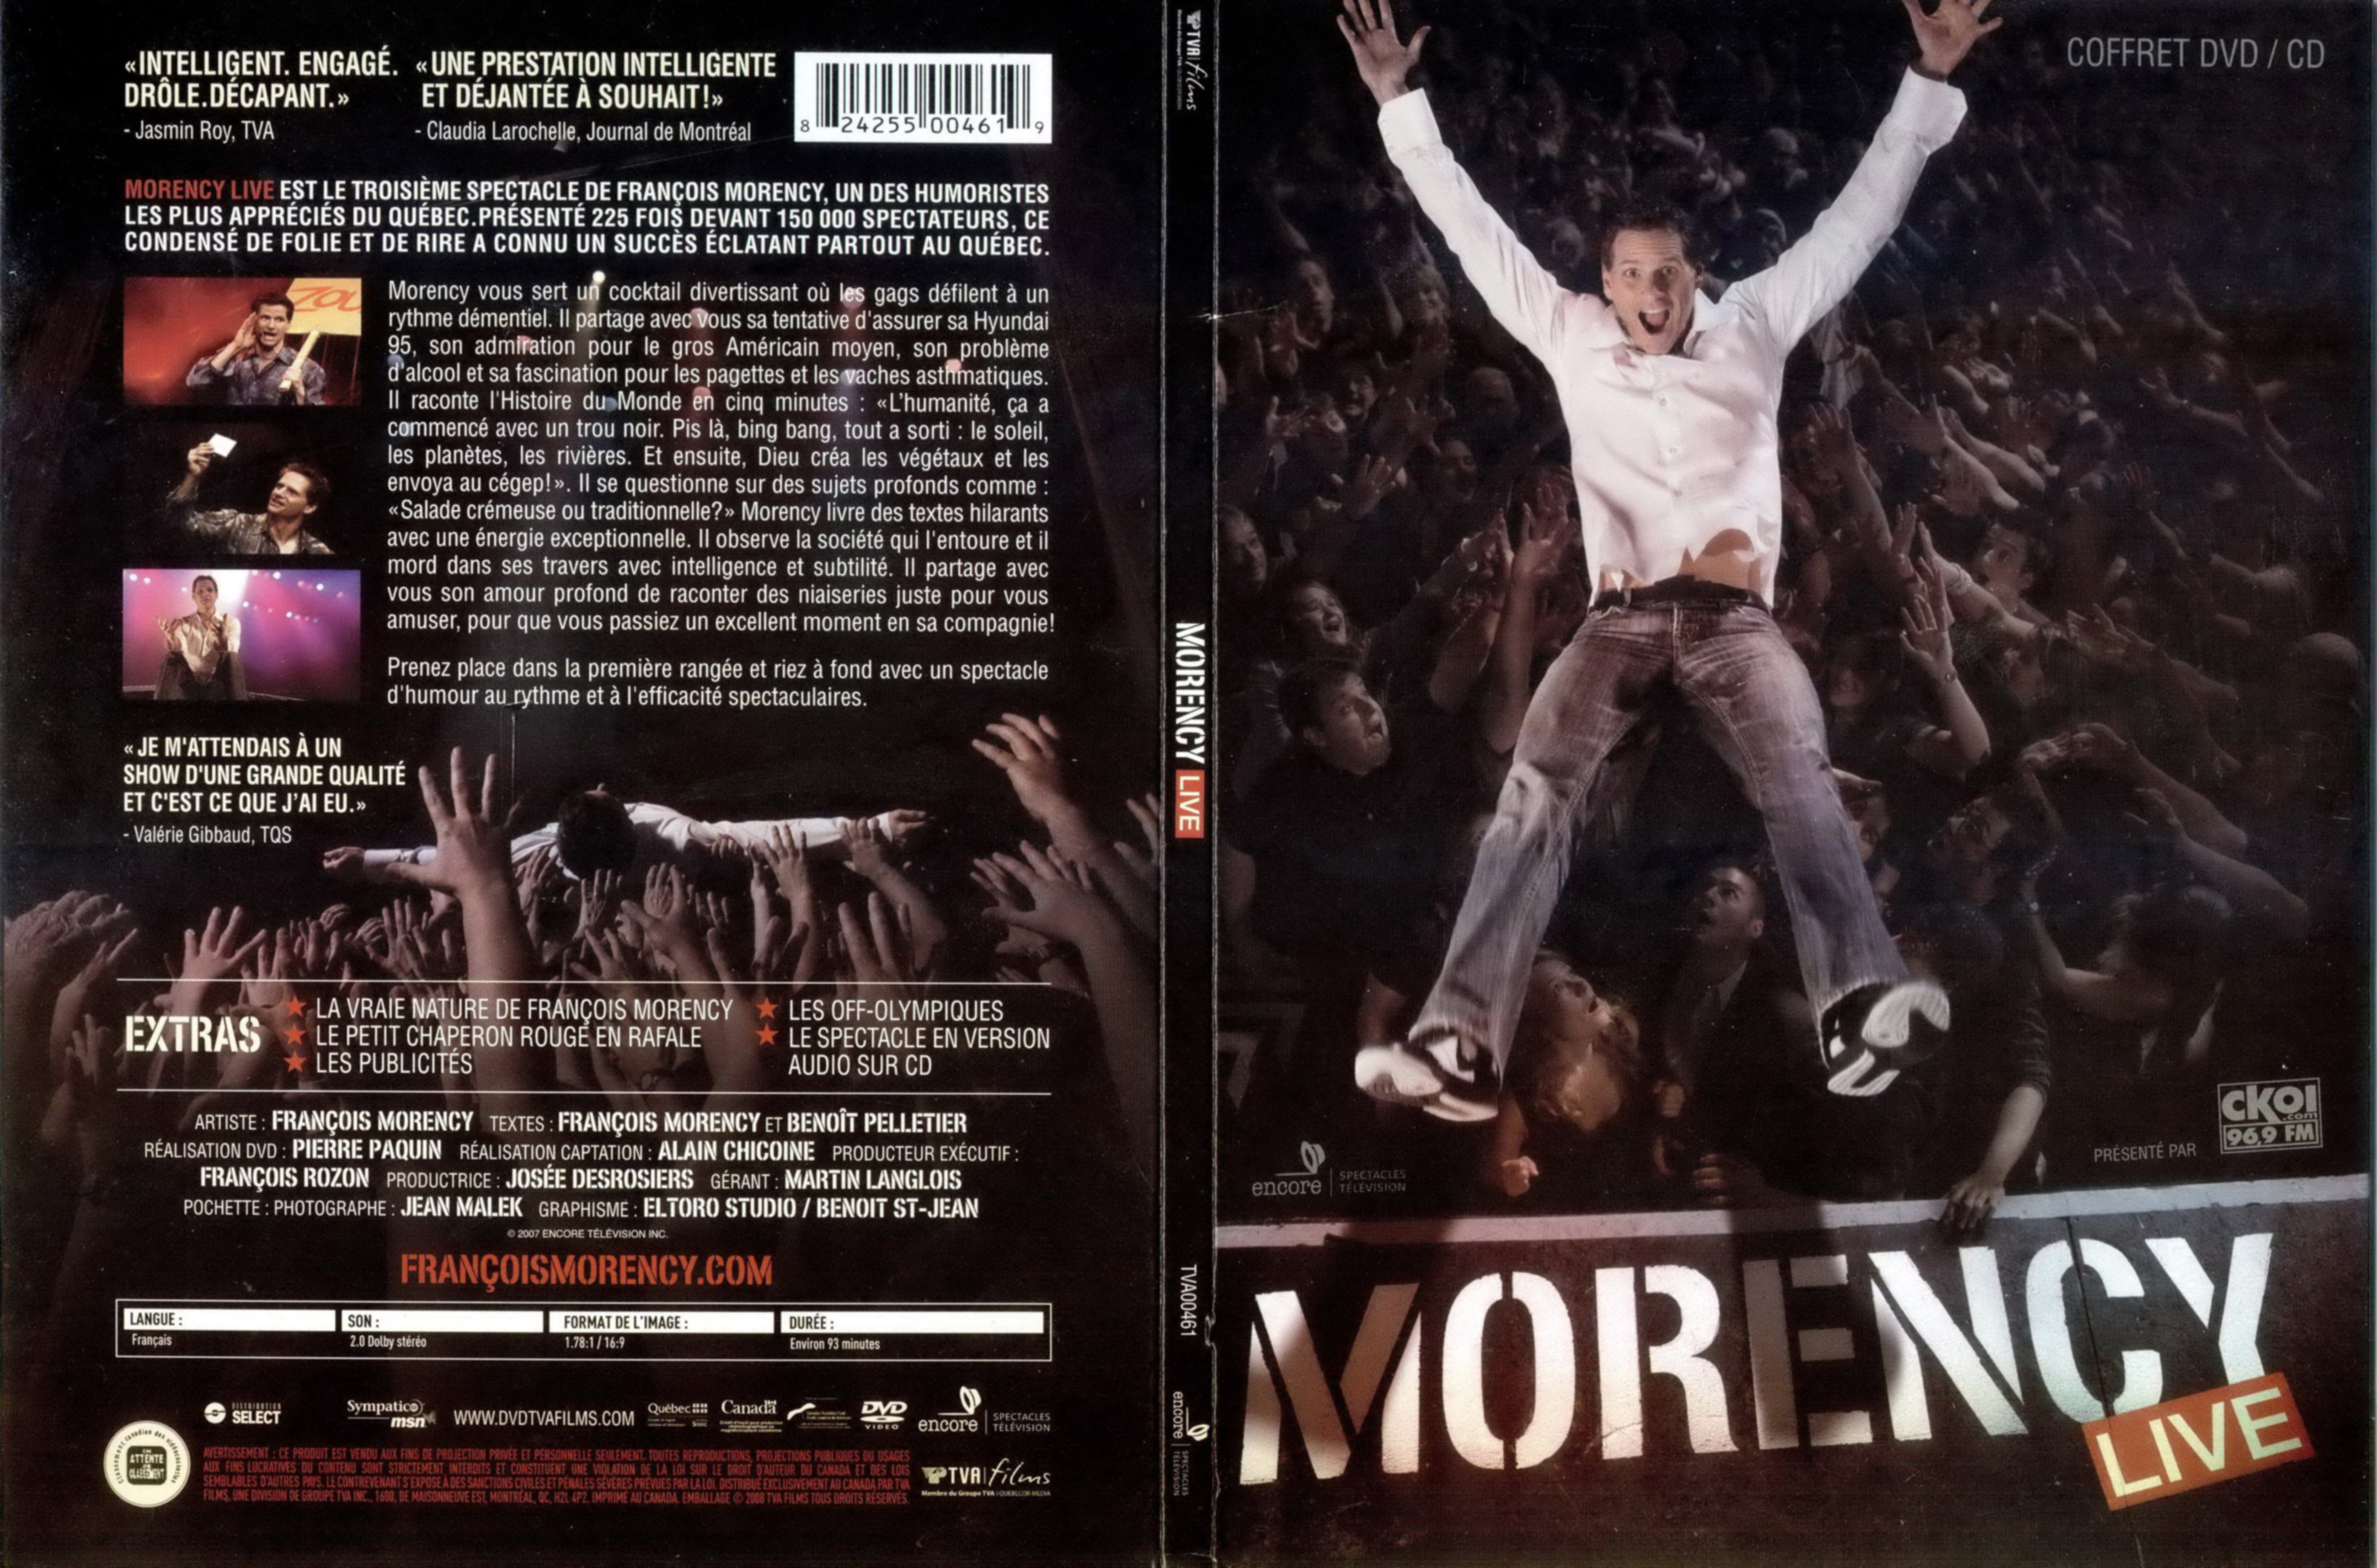 Jaquette DVD Francois Morency - Morency Live